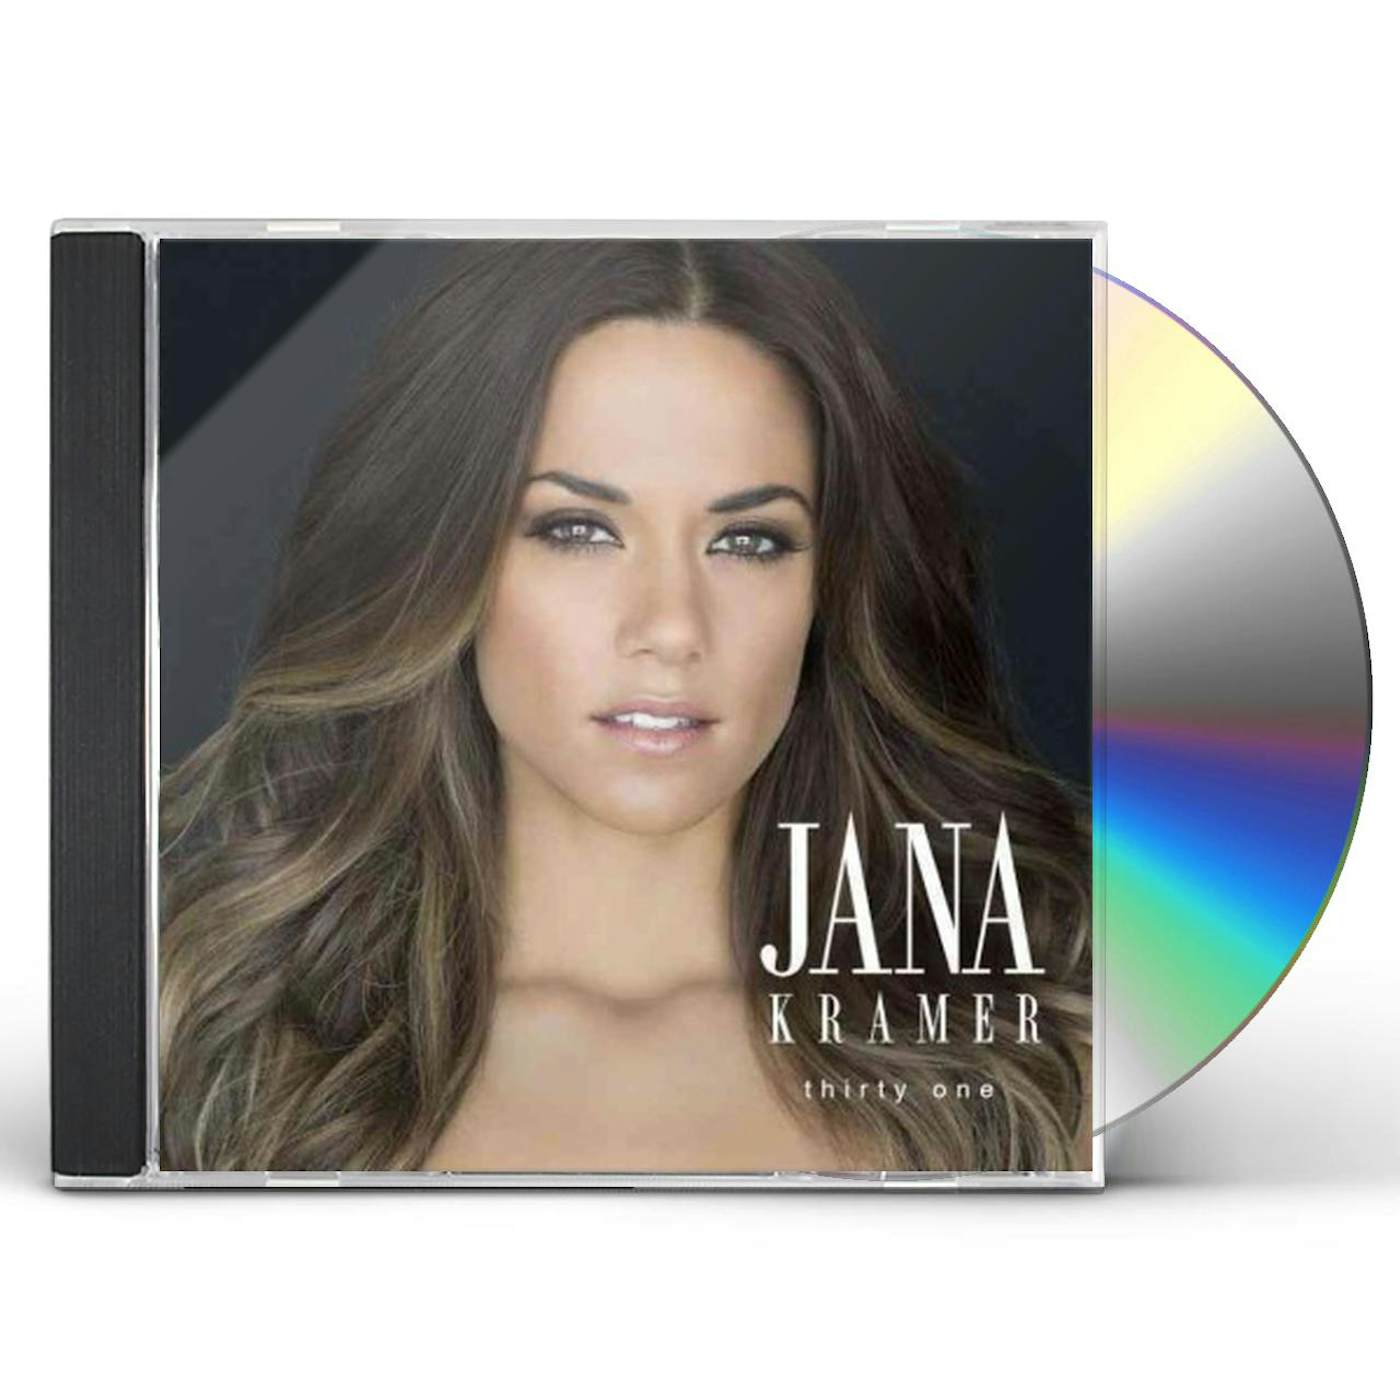 Jana Kramer THIRTY ONE CD